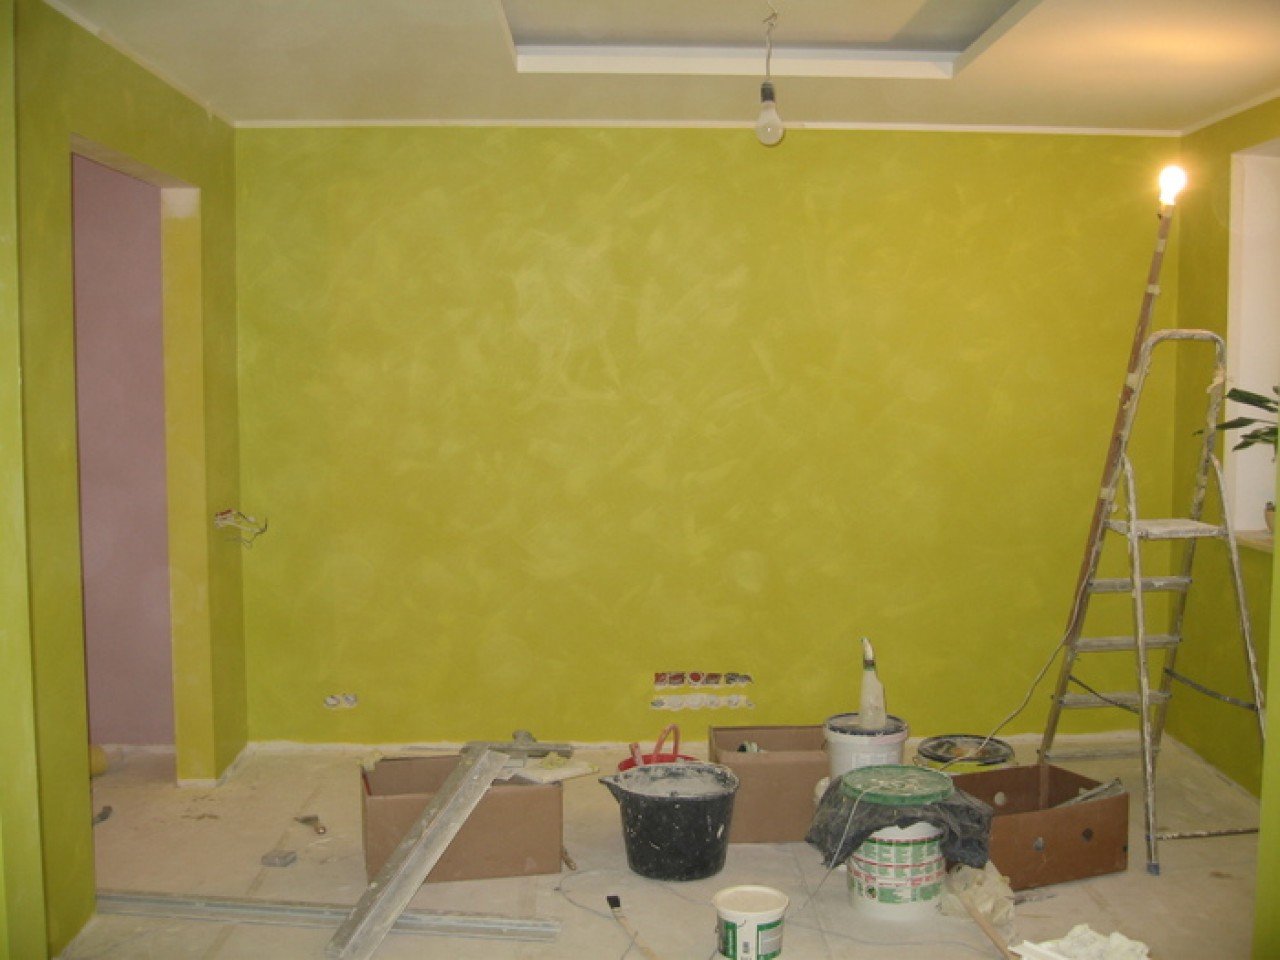 Ремонт малярные работы. Покраска стен. Покрашенные стены. Покрашенные стены в квартире. Красивая краска для стен в квартире.